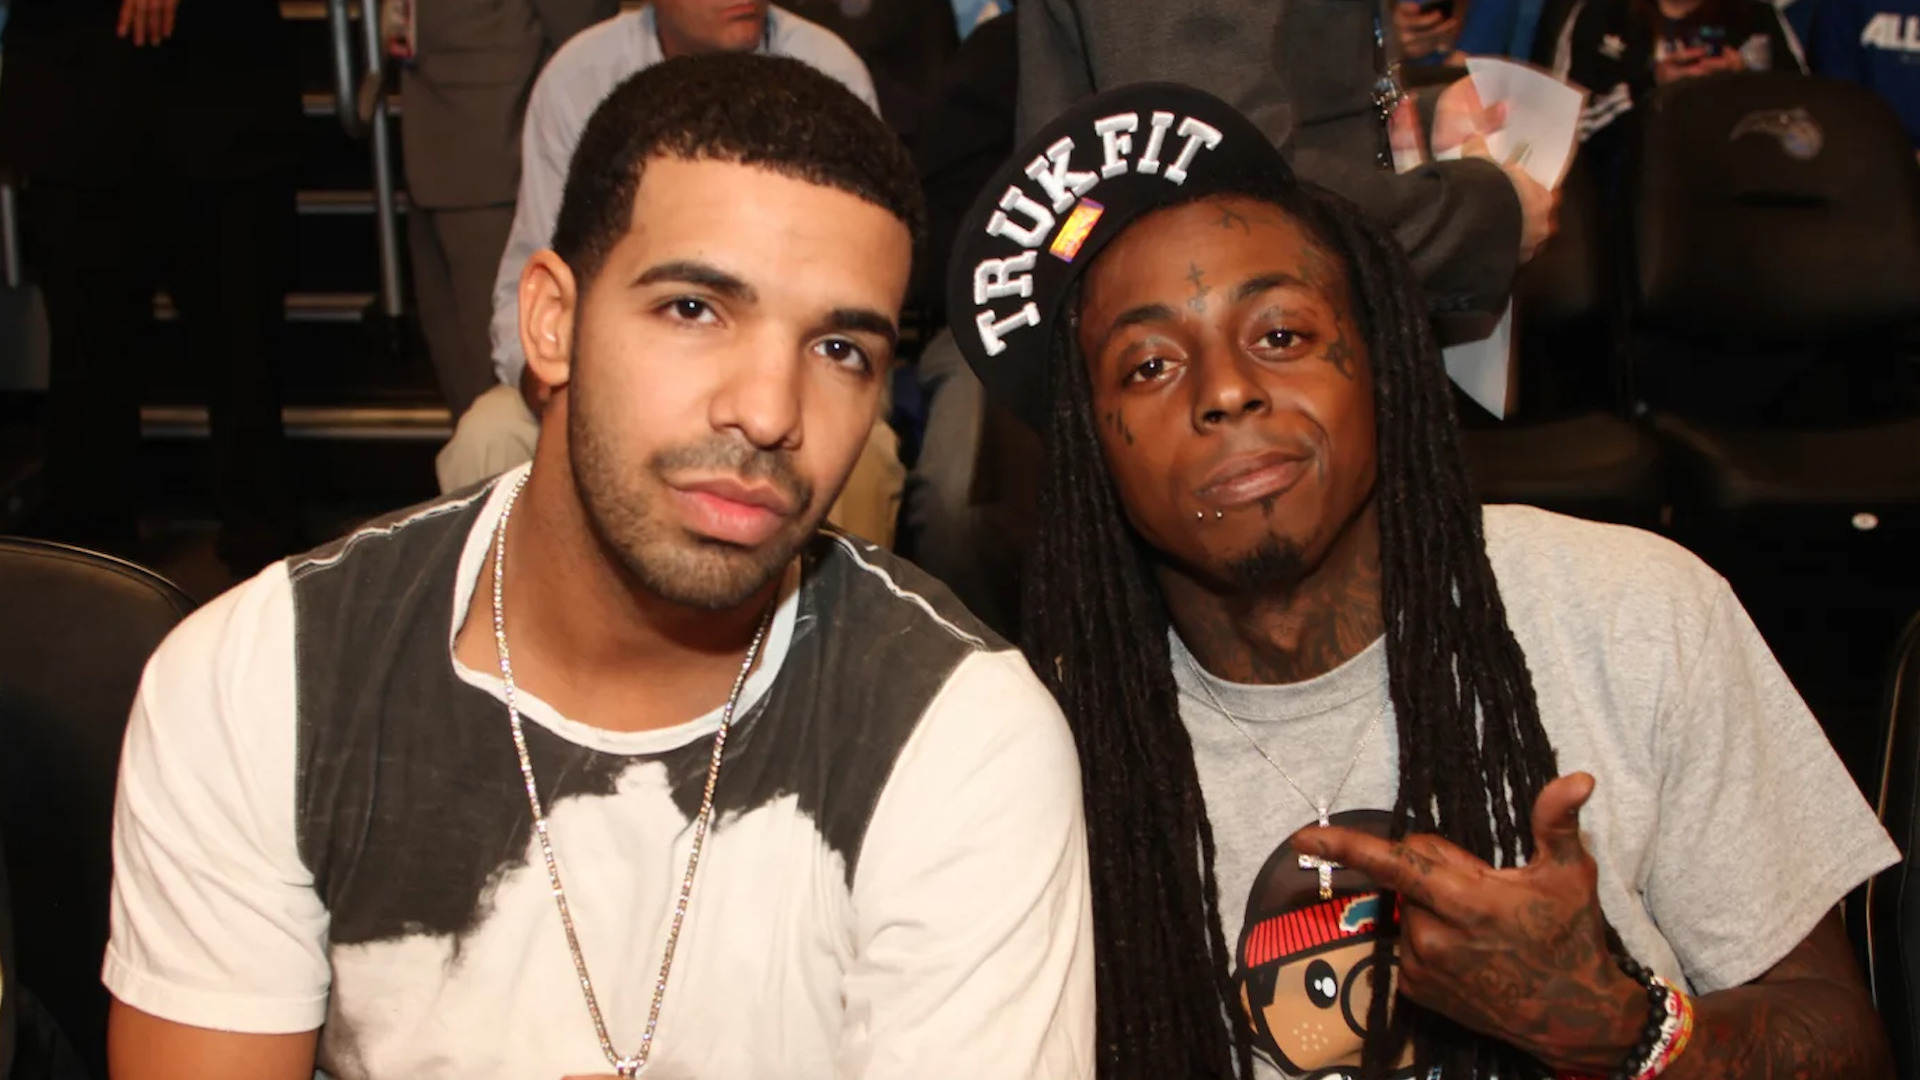 WATCH: Drake calls Lil Wayne the G.O.A.T. at Young Money Reunion